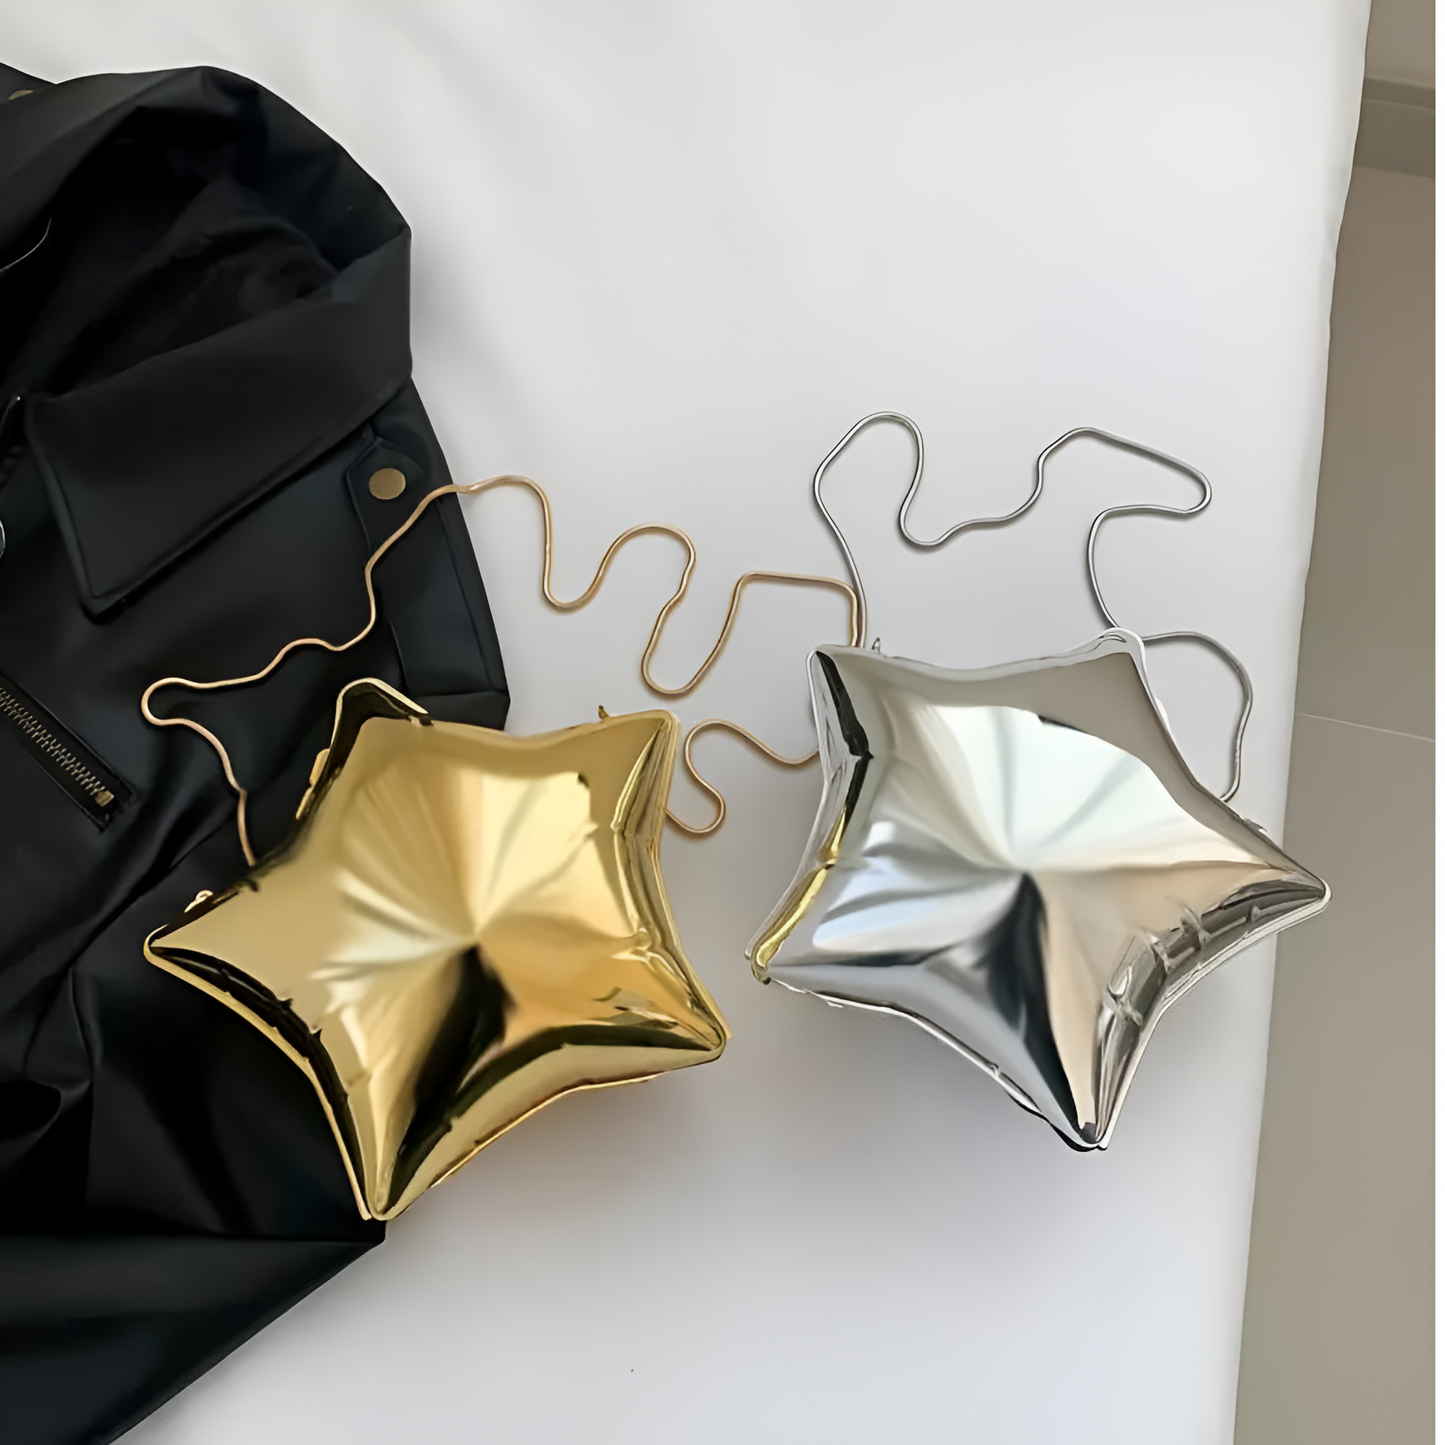 Sparko™ - Elegant Star Balloon Bag